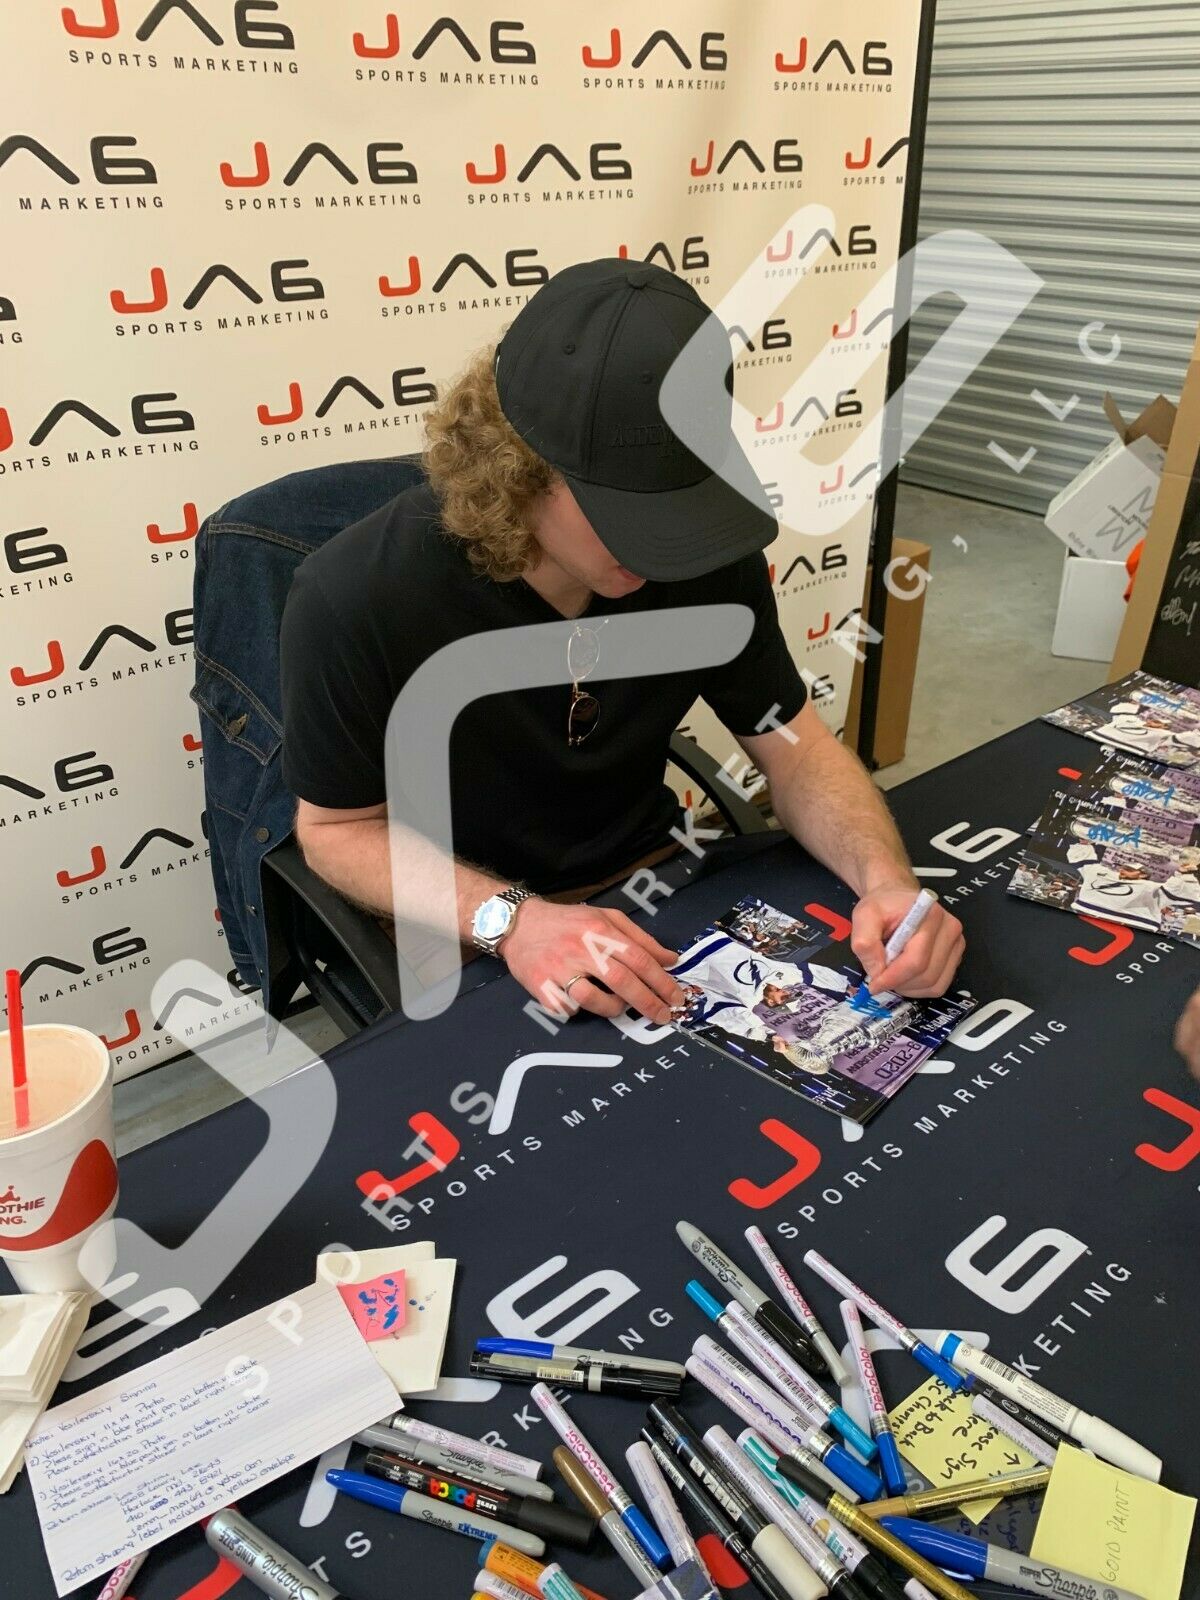 Andrei Vasilevskiy Tampa Bay Lightning Framed Autographed 8 x 10 Black  Jersey In Net Photograph